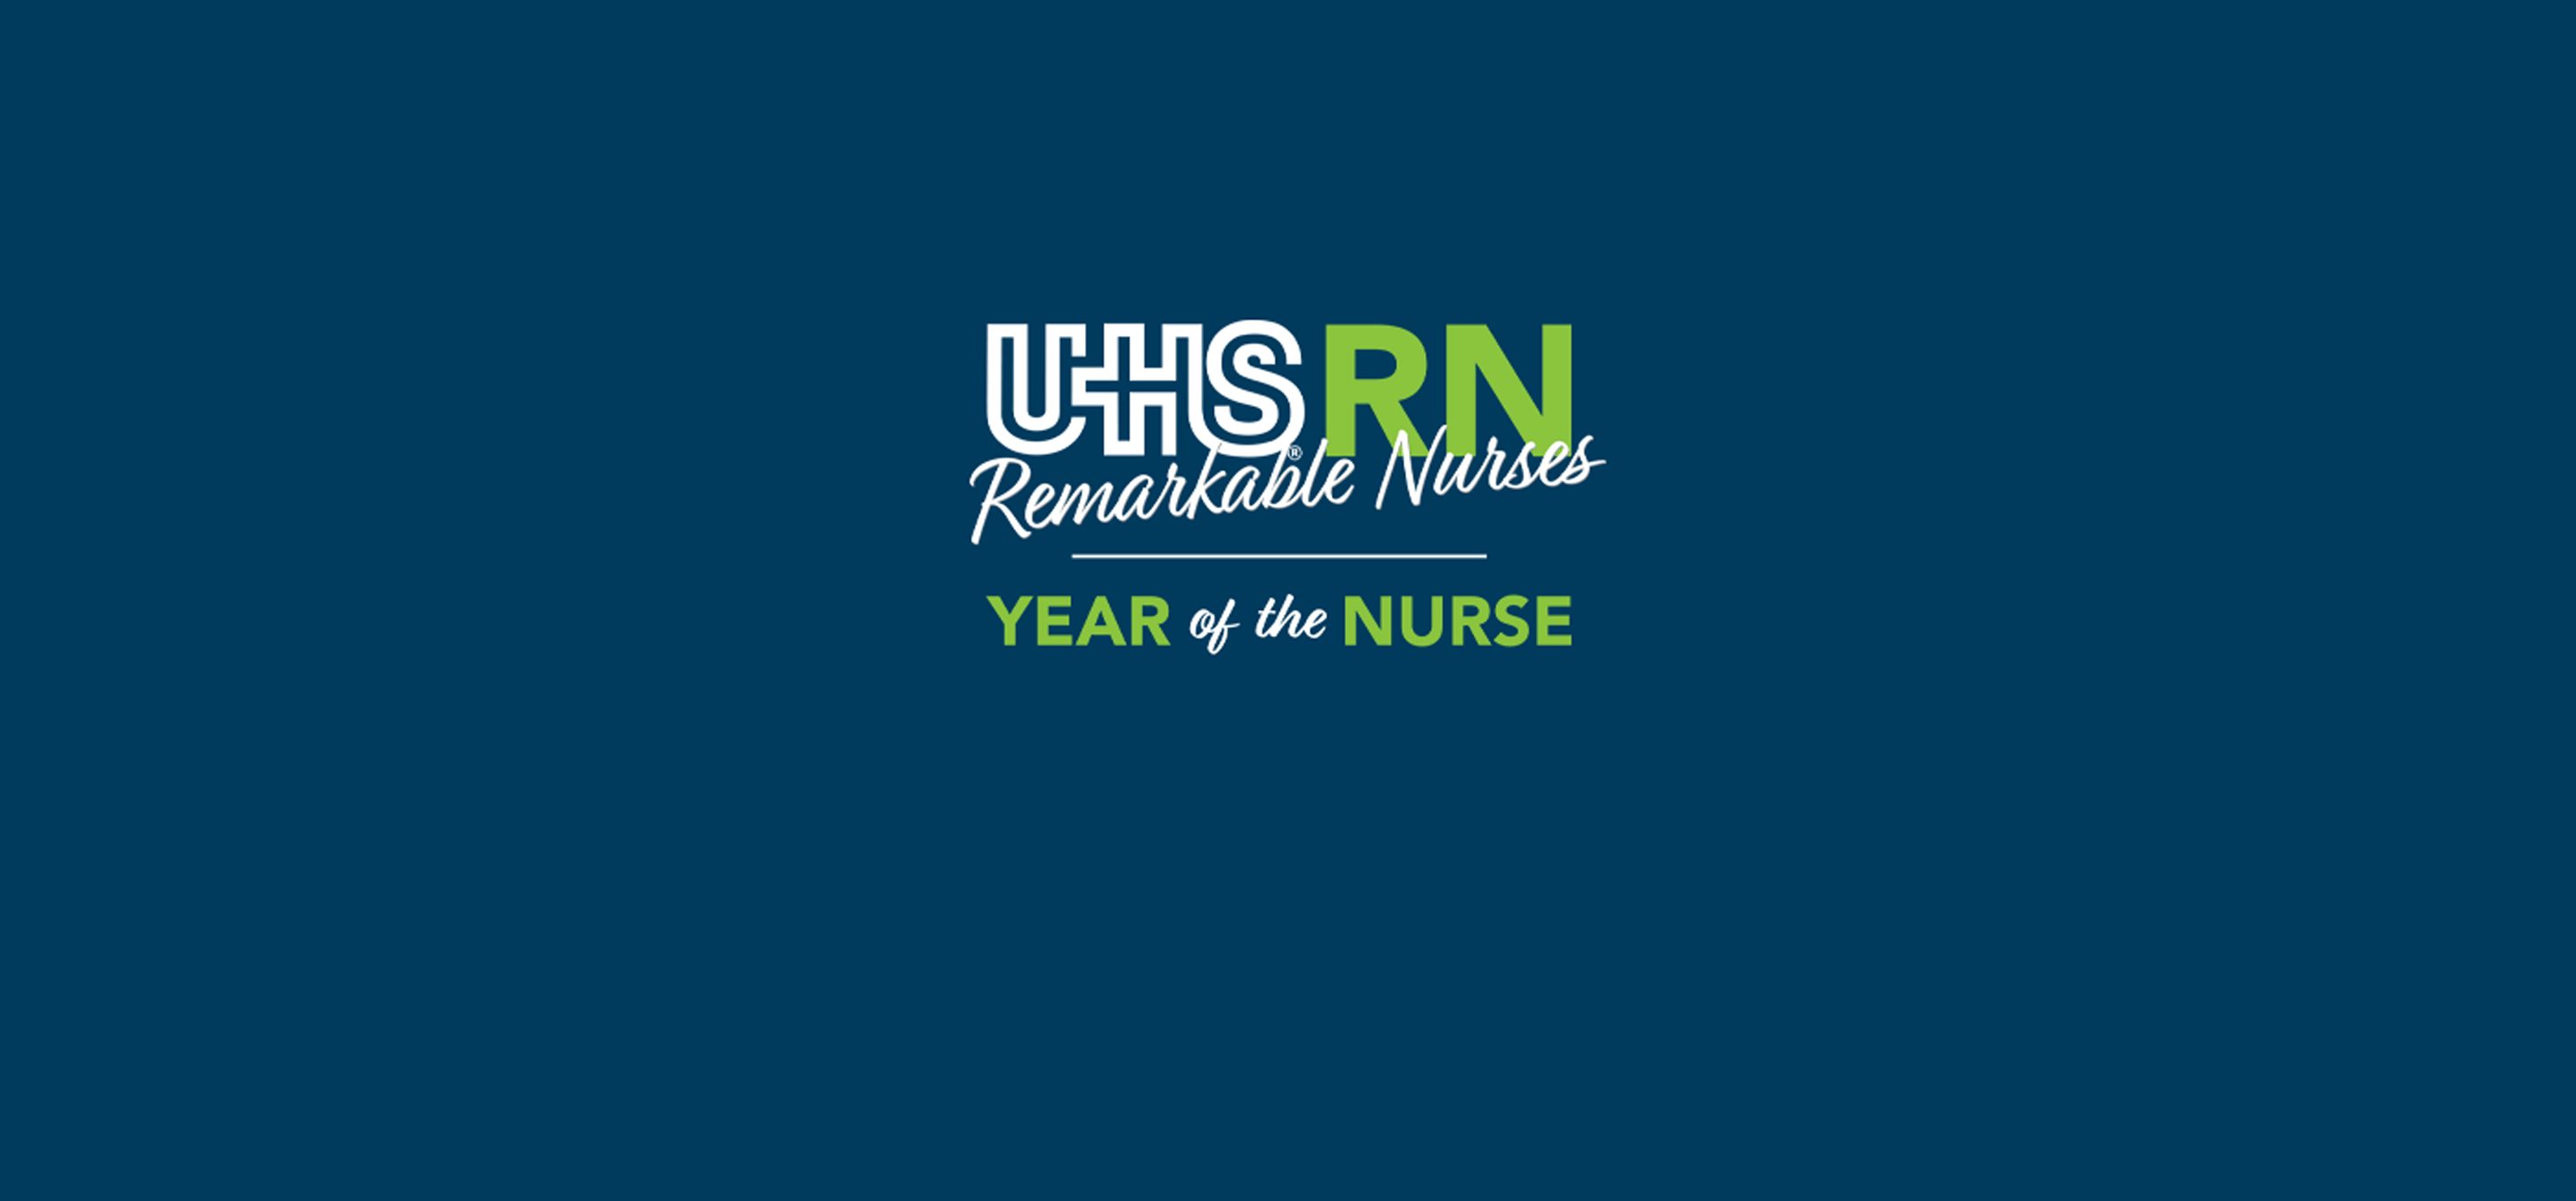 UHS Remarkable Nurses Year of the Nurse